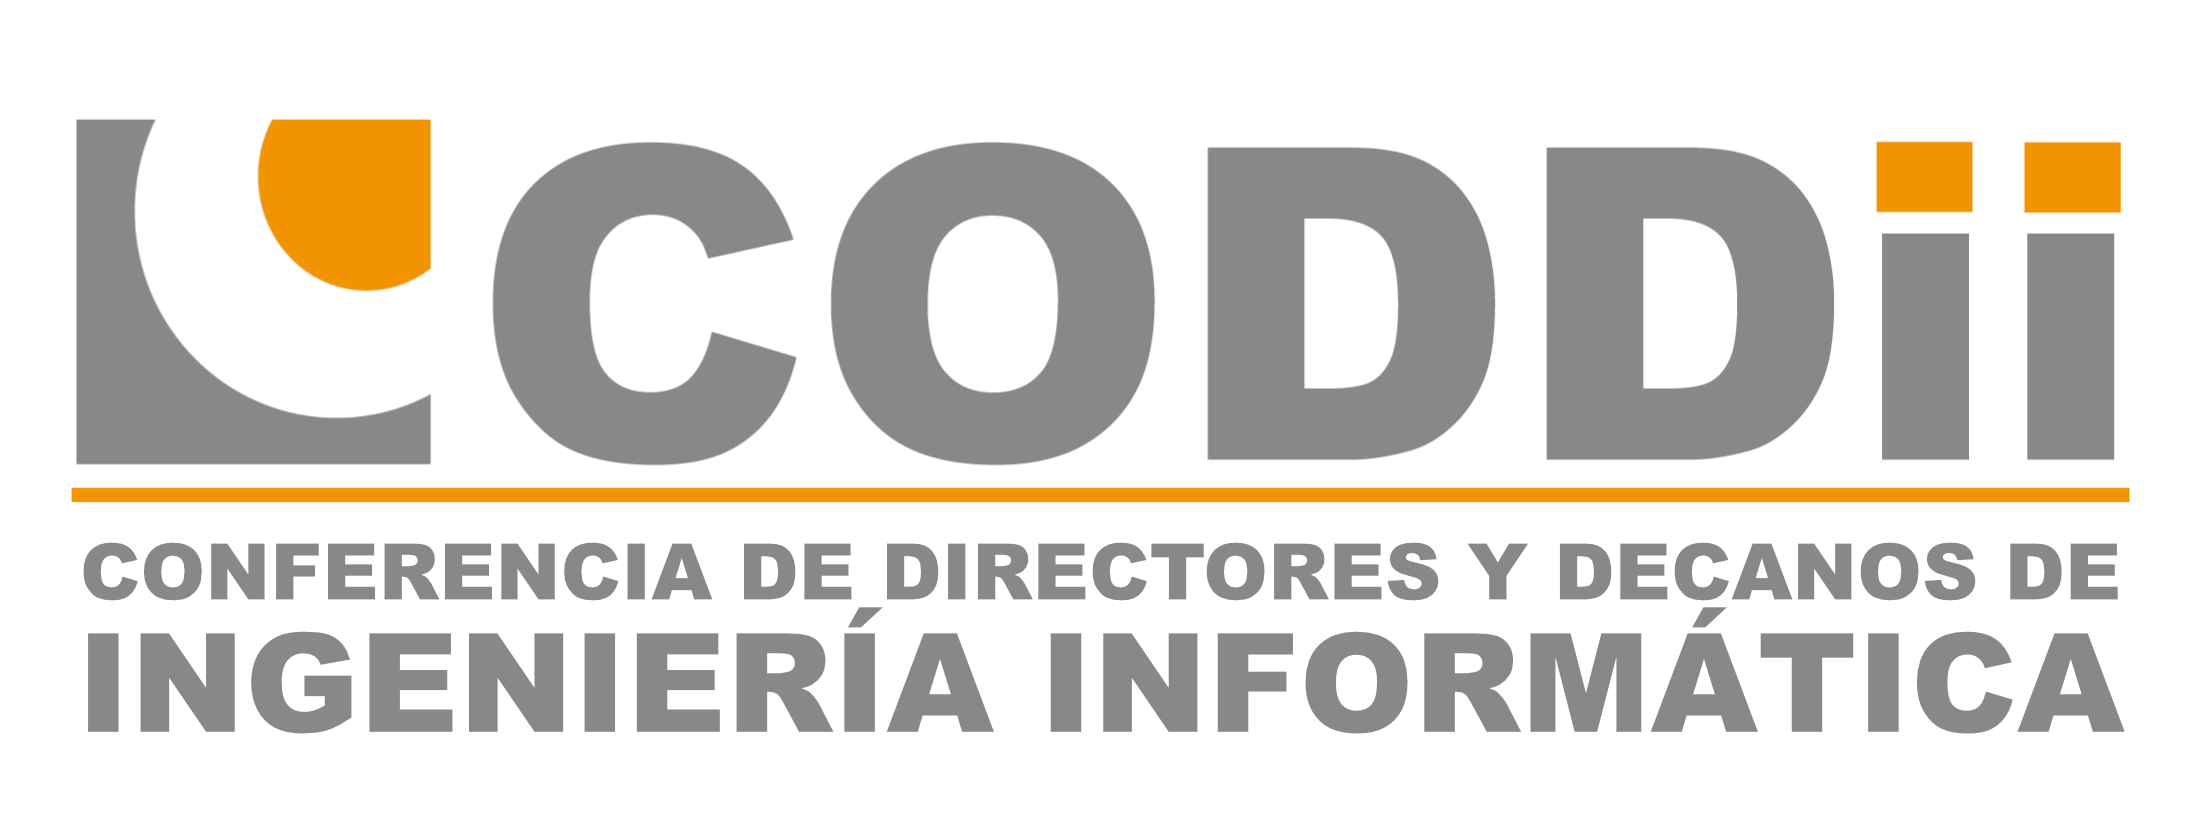 CODDII logo